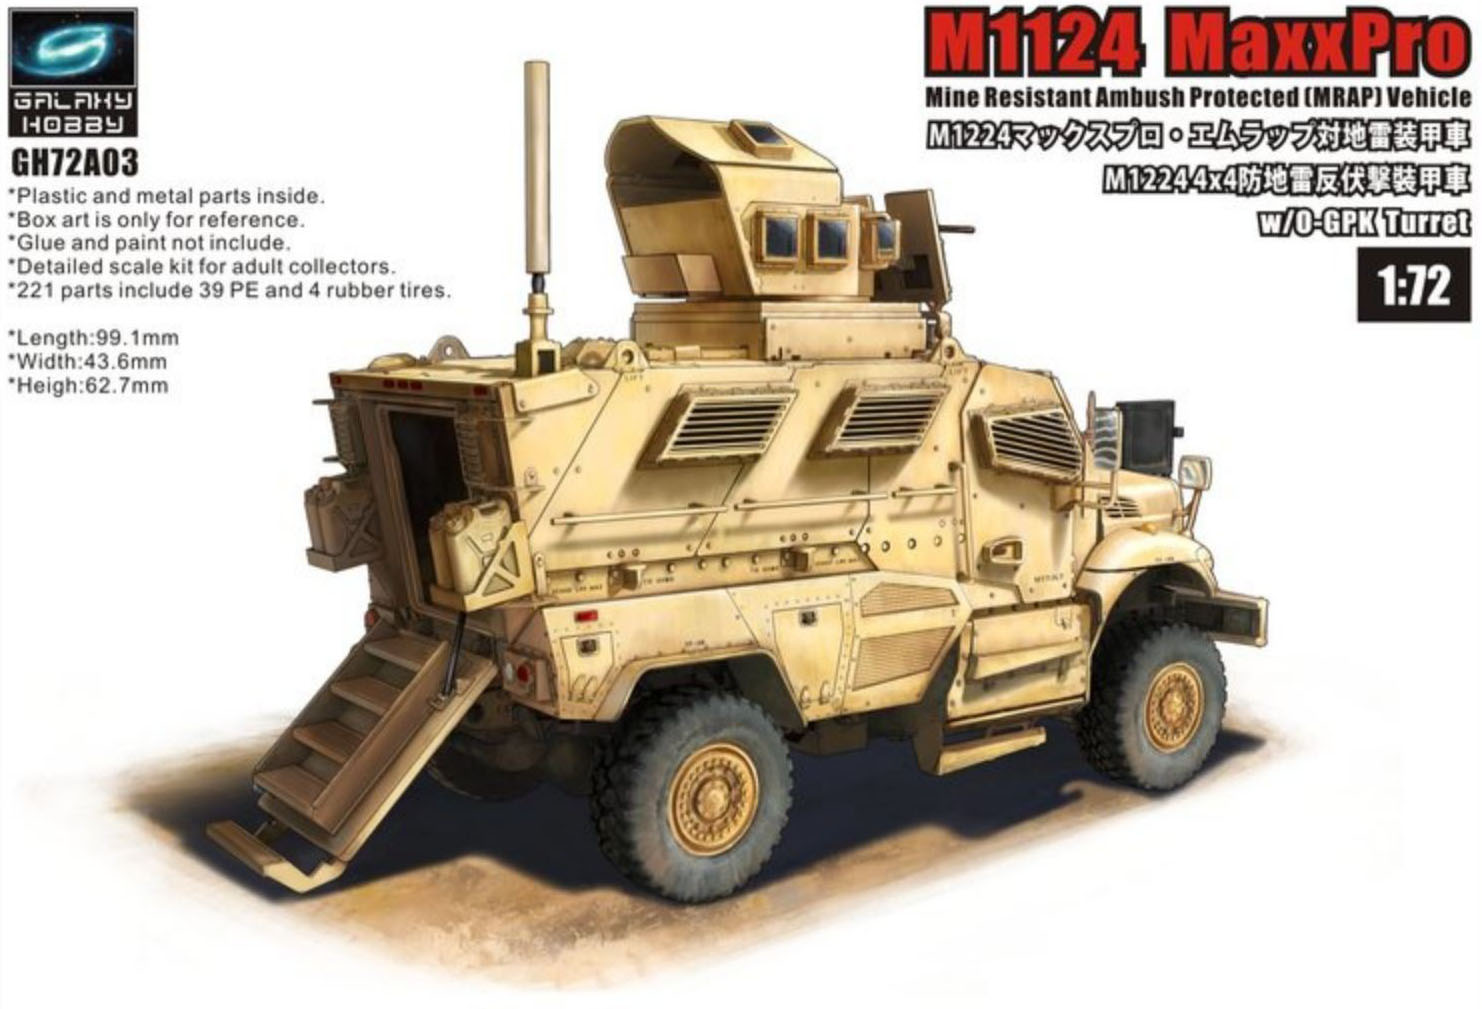 1/72 M1224 MaxxPro MRAP w/O-GPK Turret - Click Image to Close